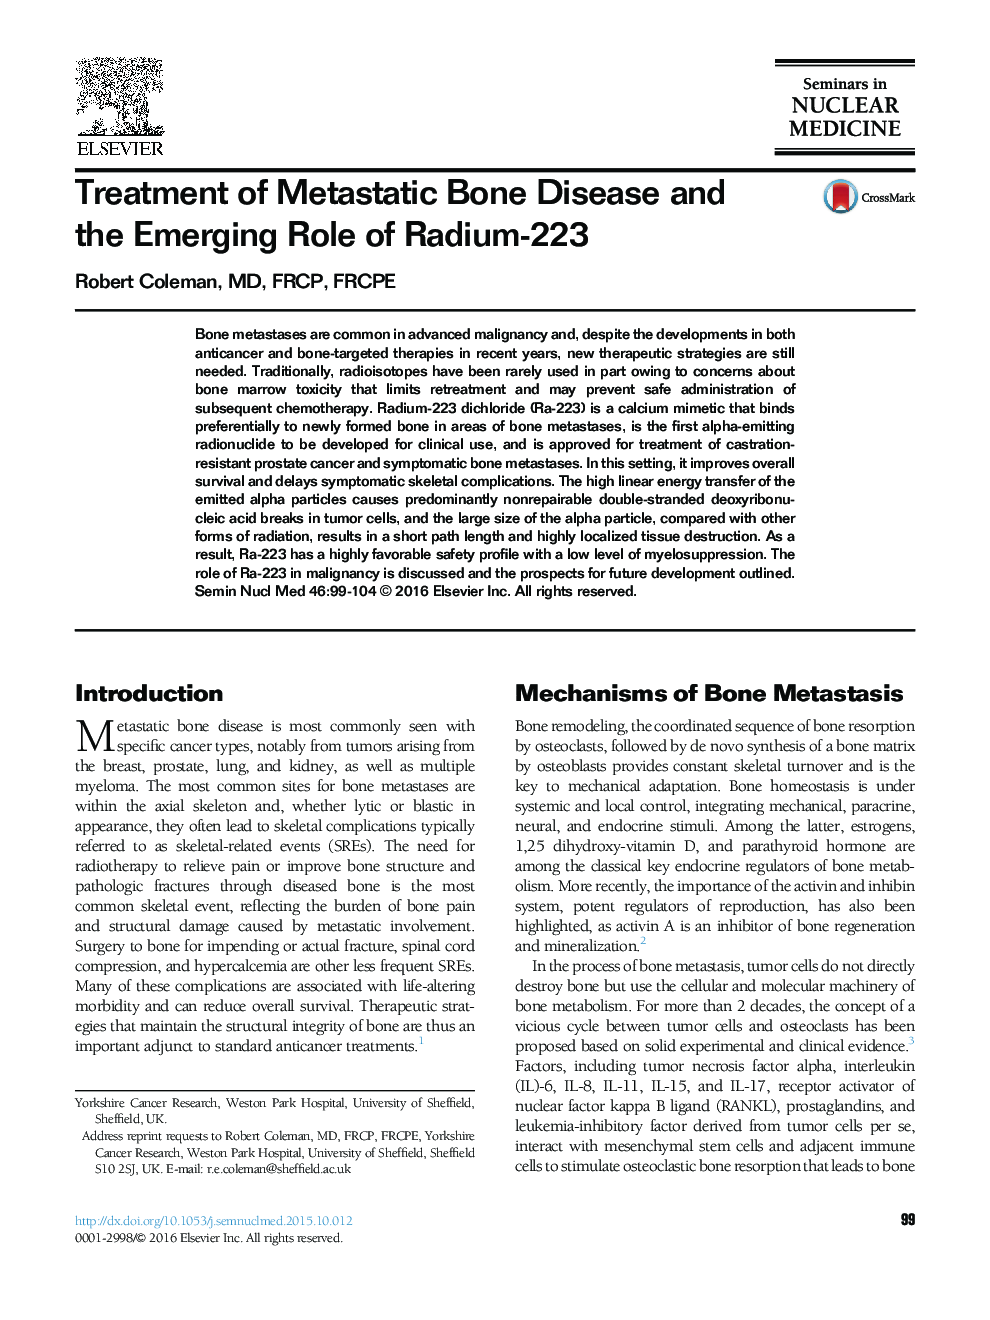 Treatment of Metastatic Bone Disease and the Emerging Role of Radium-223